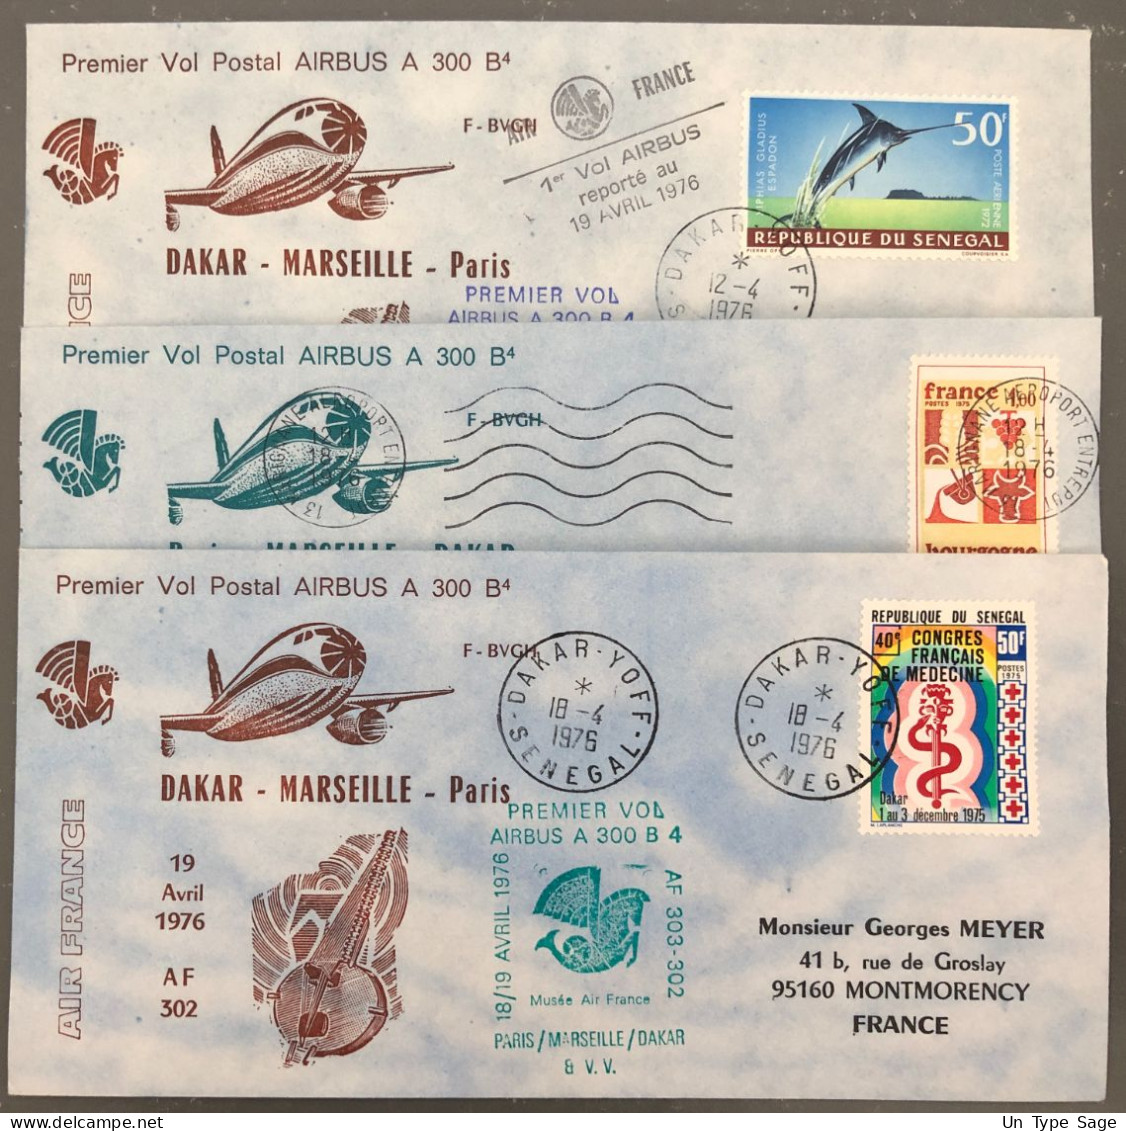 France, Premier Vol (Air France) Paris, Marseille, Dakar, 19.4.1976 - 3 Enveloppes - (B1499) - Primi Voli